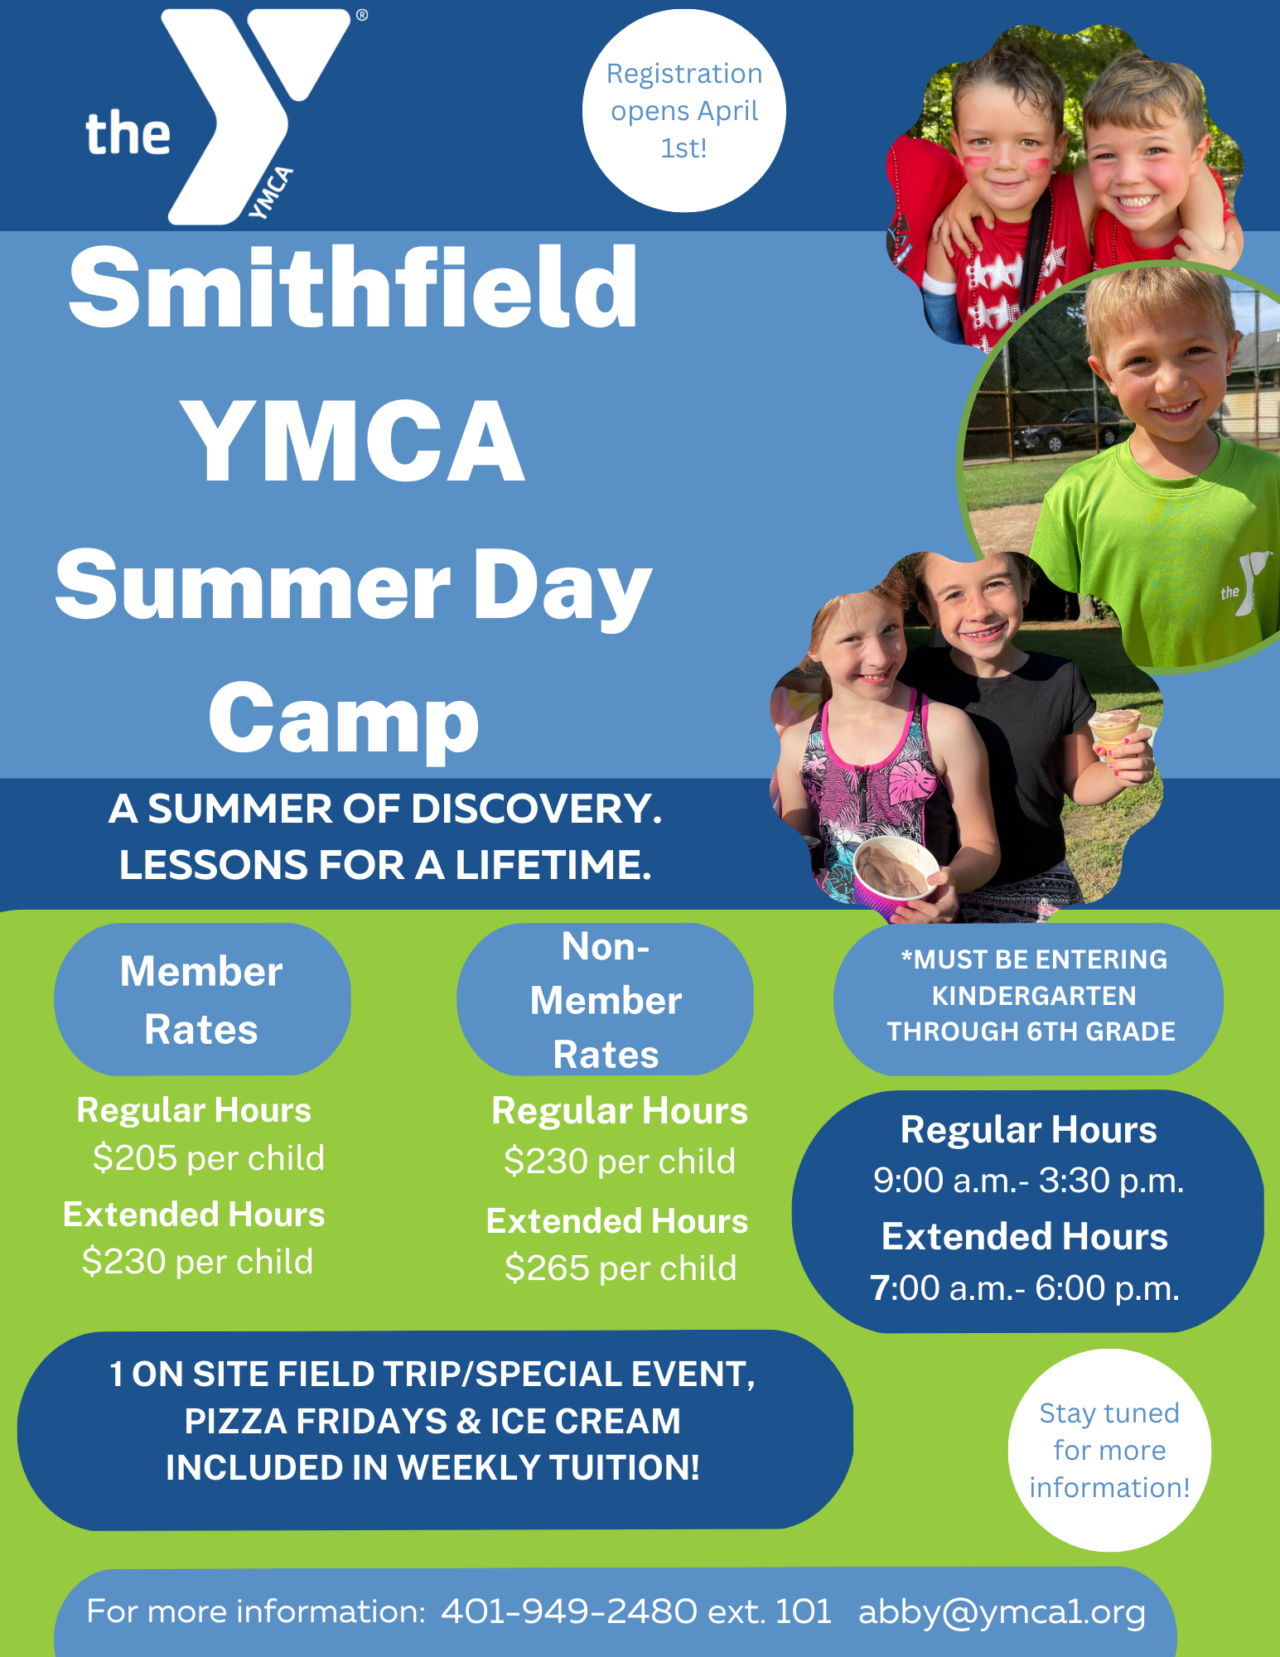 YMCA Summer Camp Smithfield YMCA